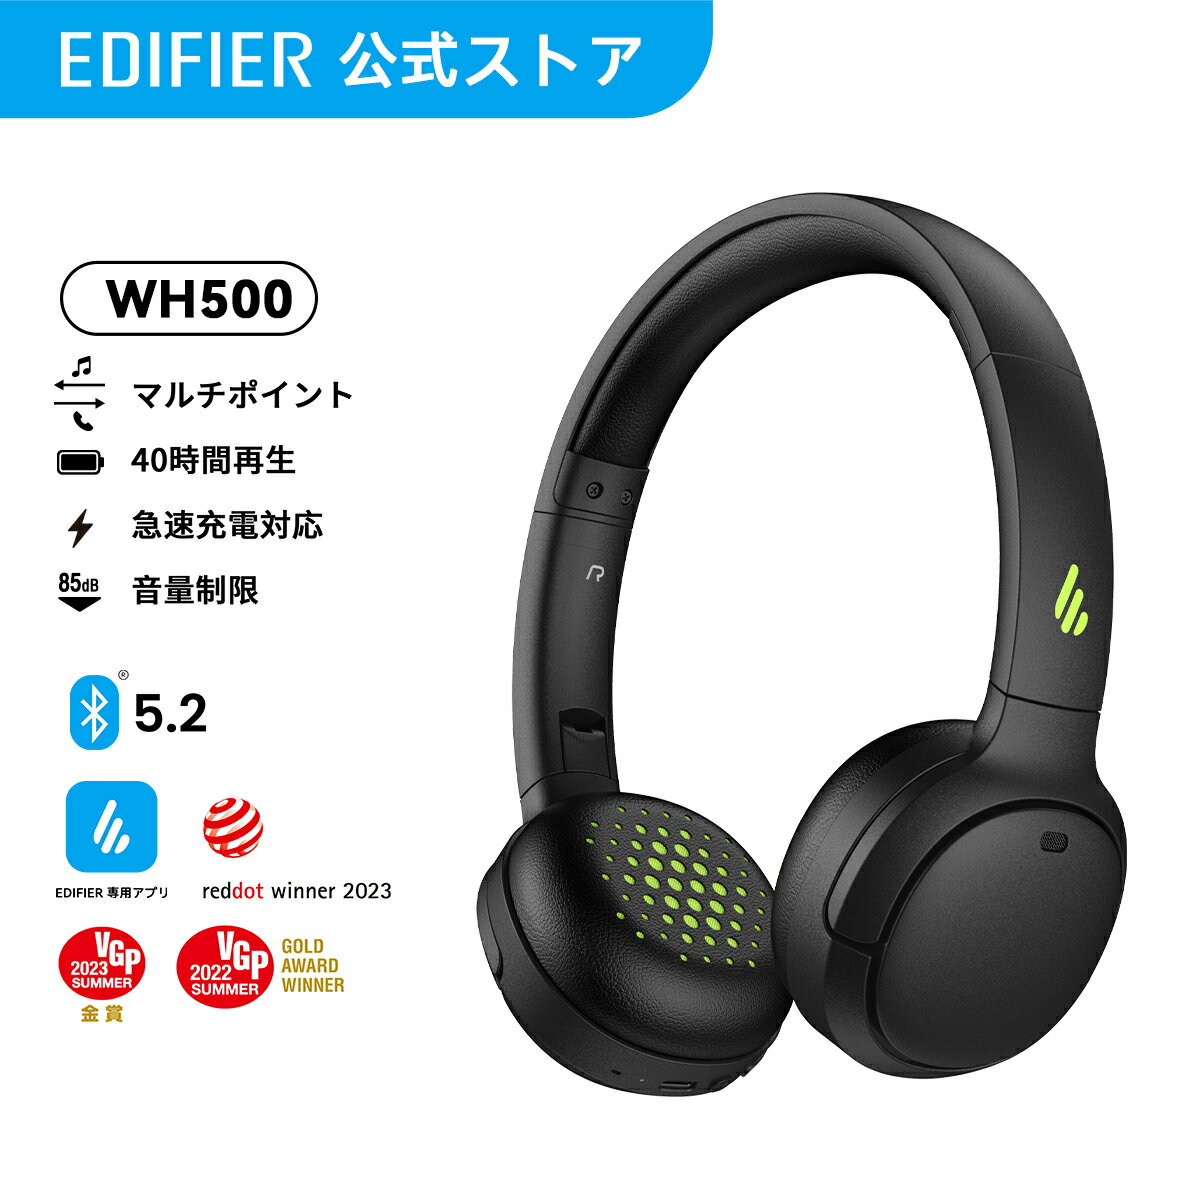 EDIFIER WH500 ワイヤレス ヘッドホン Bluetooth 無線 ヘッドセット 重低音ワイヤレスヘッドセット おしゃれ ワイヤレスヘッドホン マイク付きヘッドホン 軽量/ゲーミングヘッドセット/折り畳み/音量制限